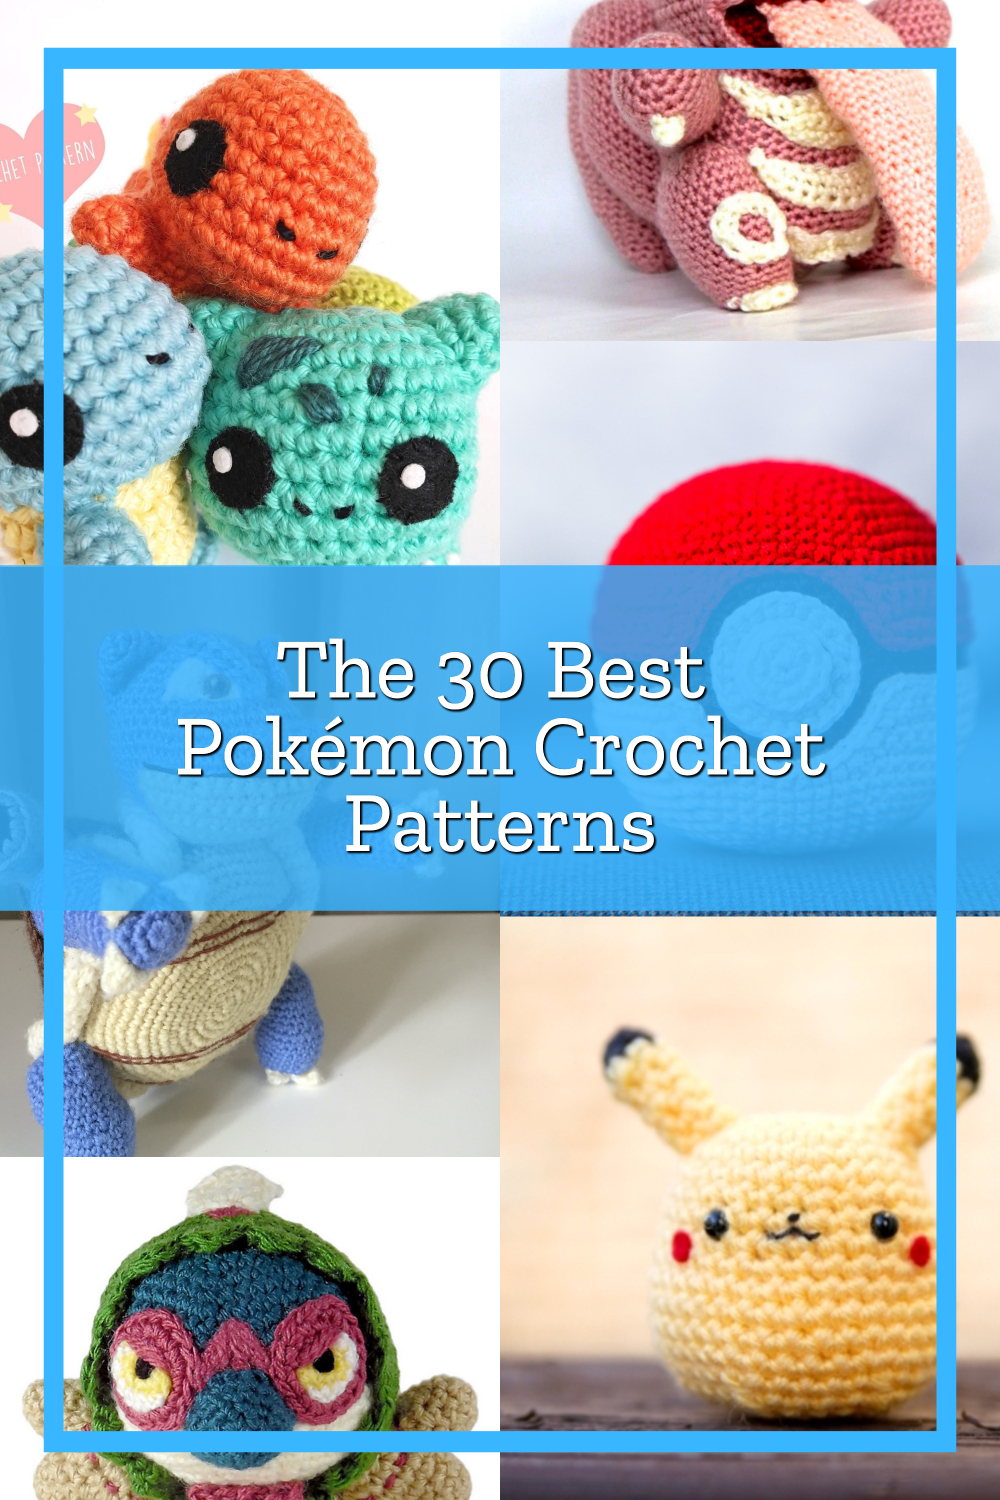 Book : Pokemon Crochet Bring Your Favorite Pokemon To Life..